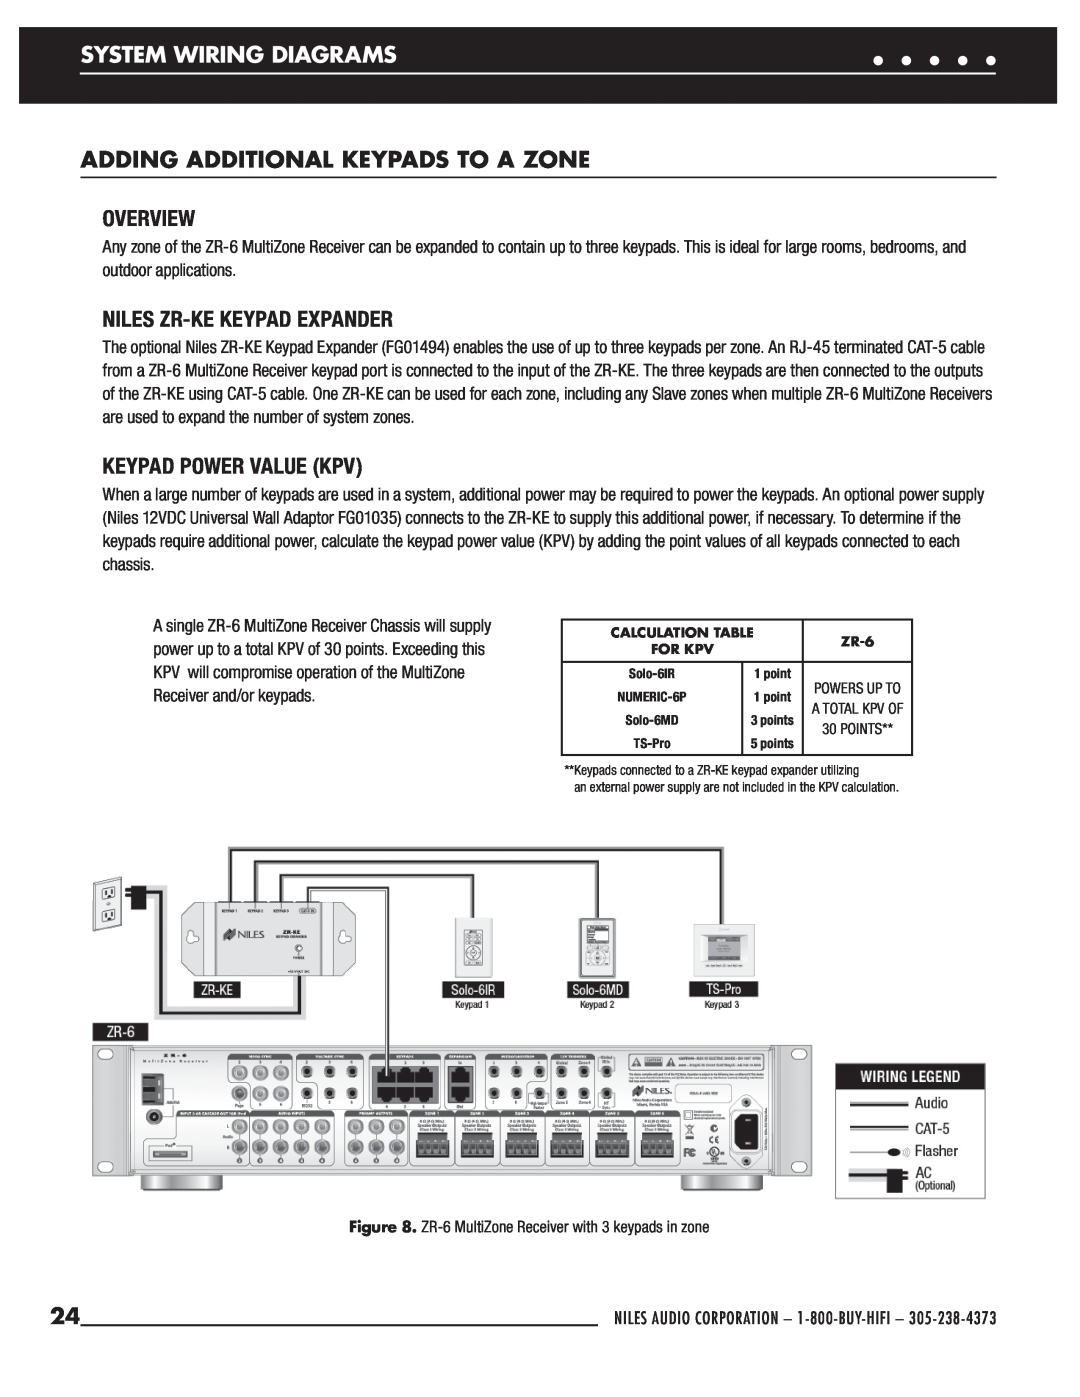 Niles Audio ZR-6 manual Adding Additional Keypads To A Zone, Niles Zr-Kekeypad Expander, Keypad Power Value Kpv, Overview 